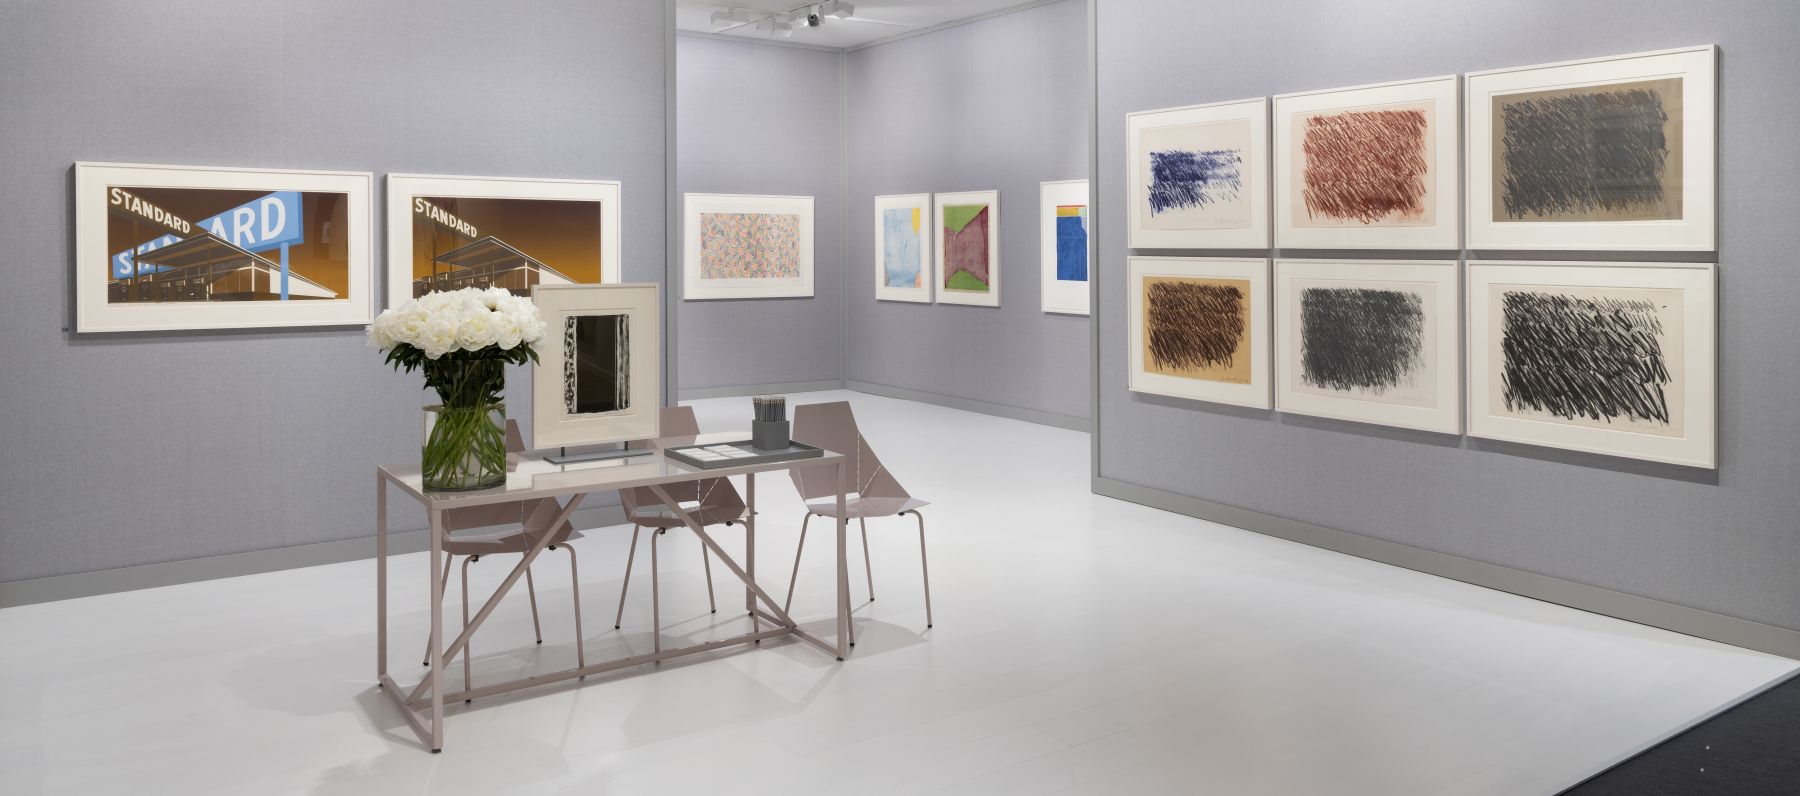 The Art Basel 2019 display at Susan Sheehan Gallery